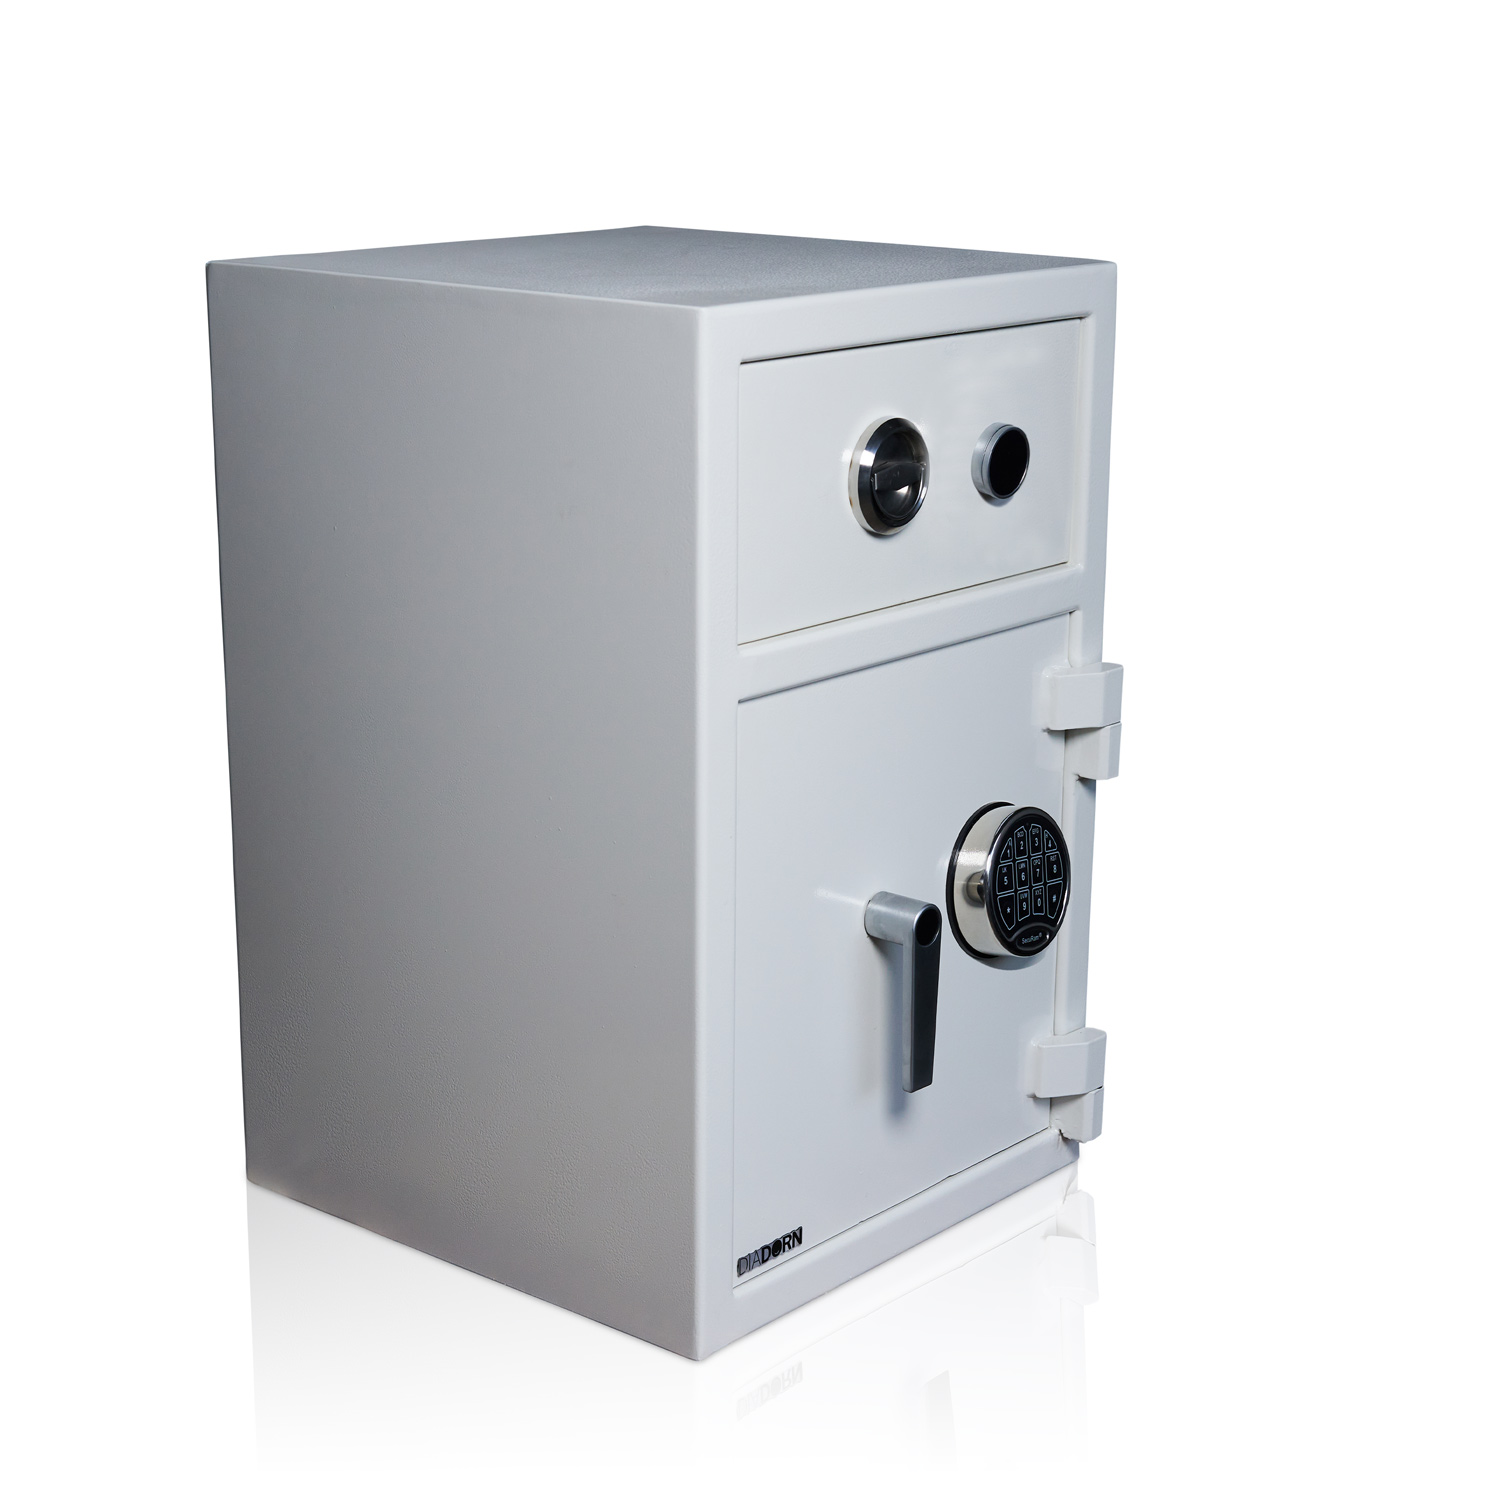 Deposit safe with drawer & key lock | Safe door with 6 locking bolts & pin code lock